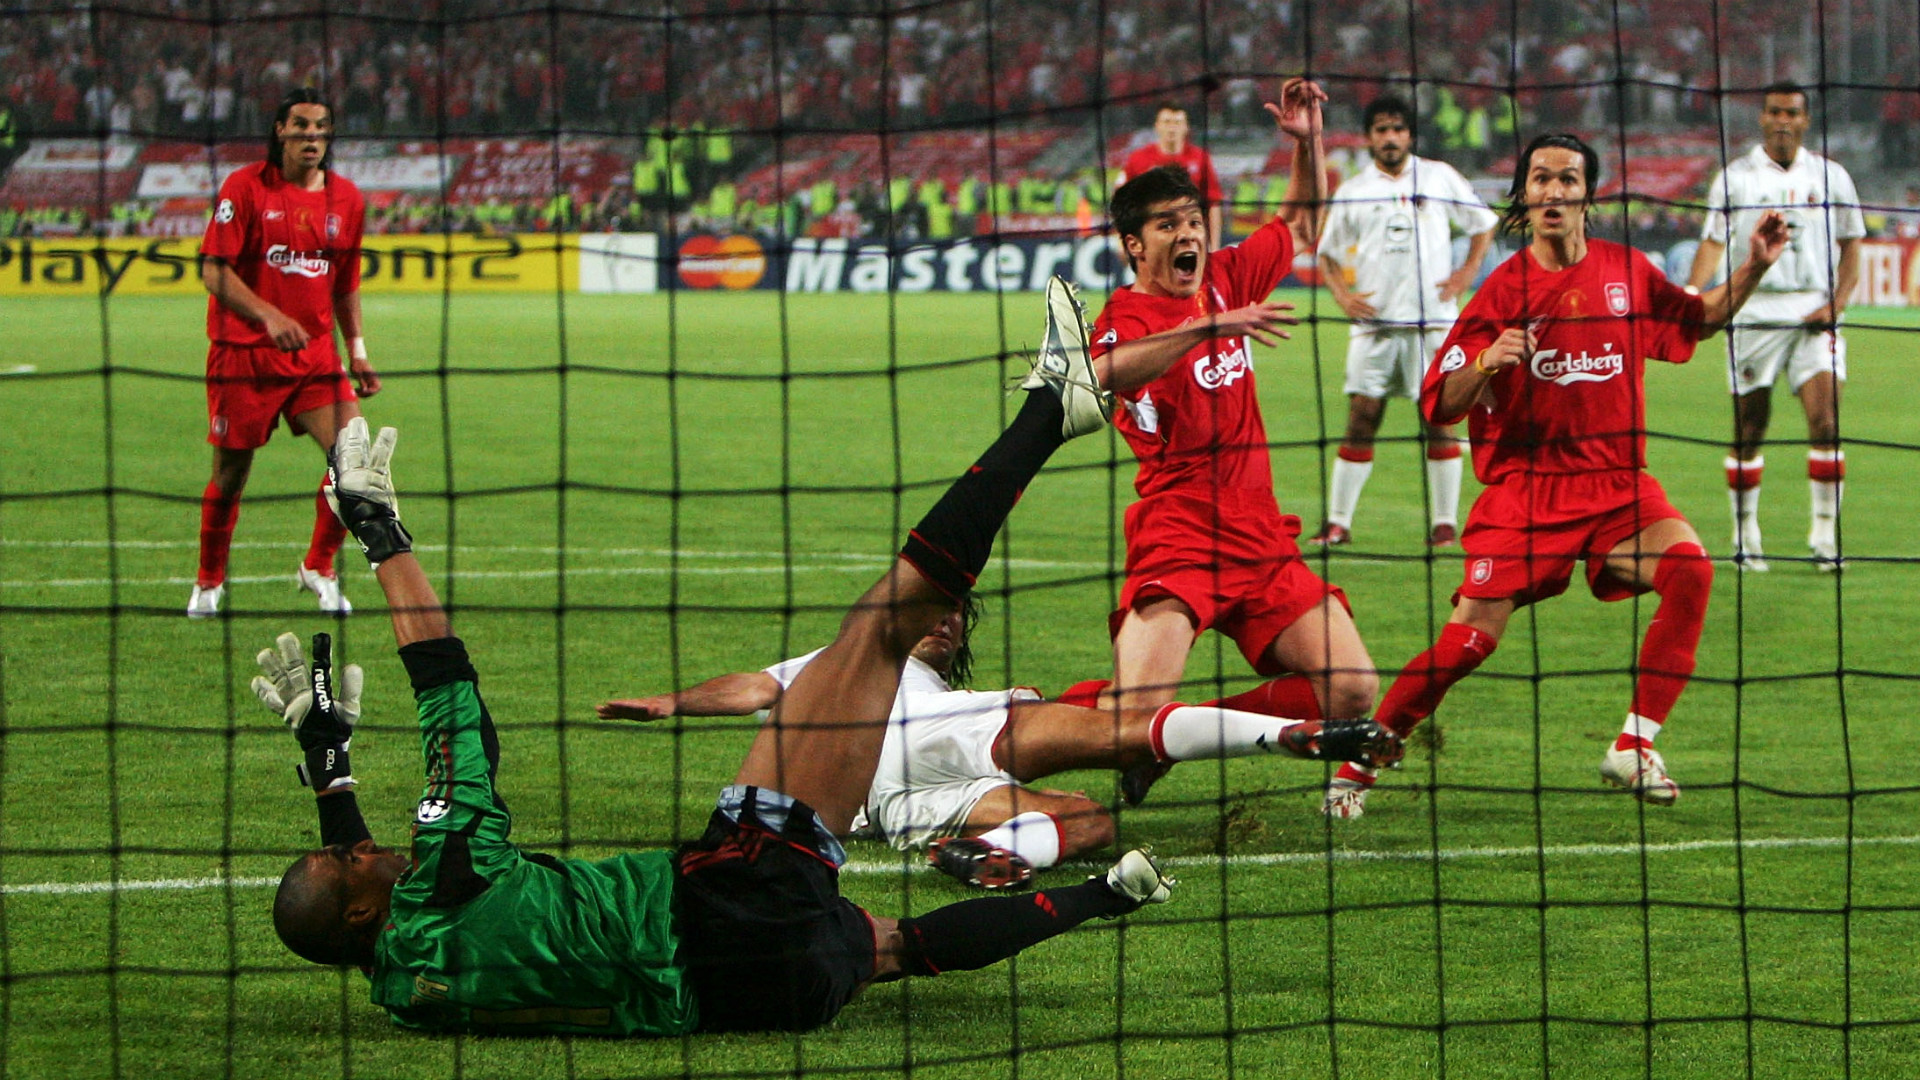 Liverpool's 2005 Champions League final 